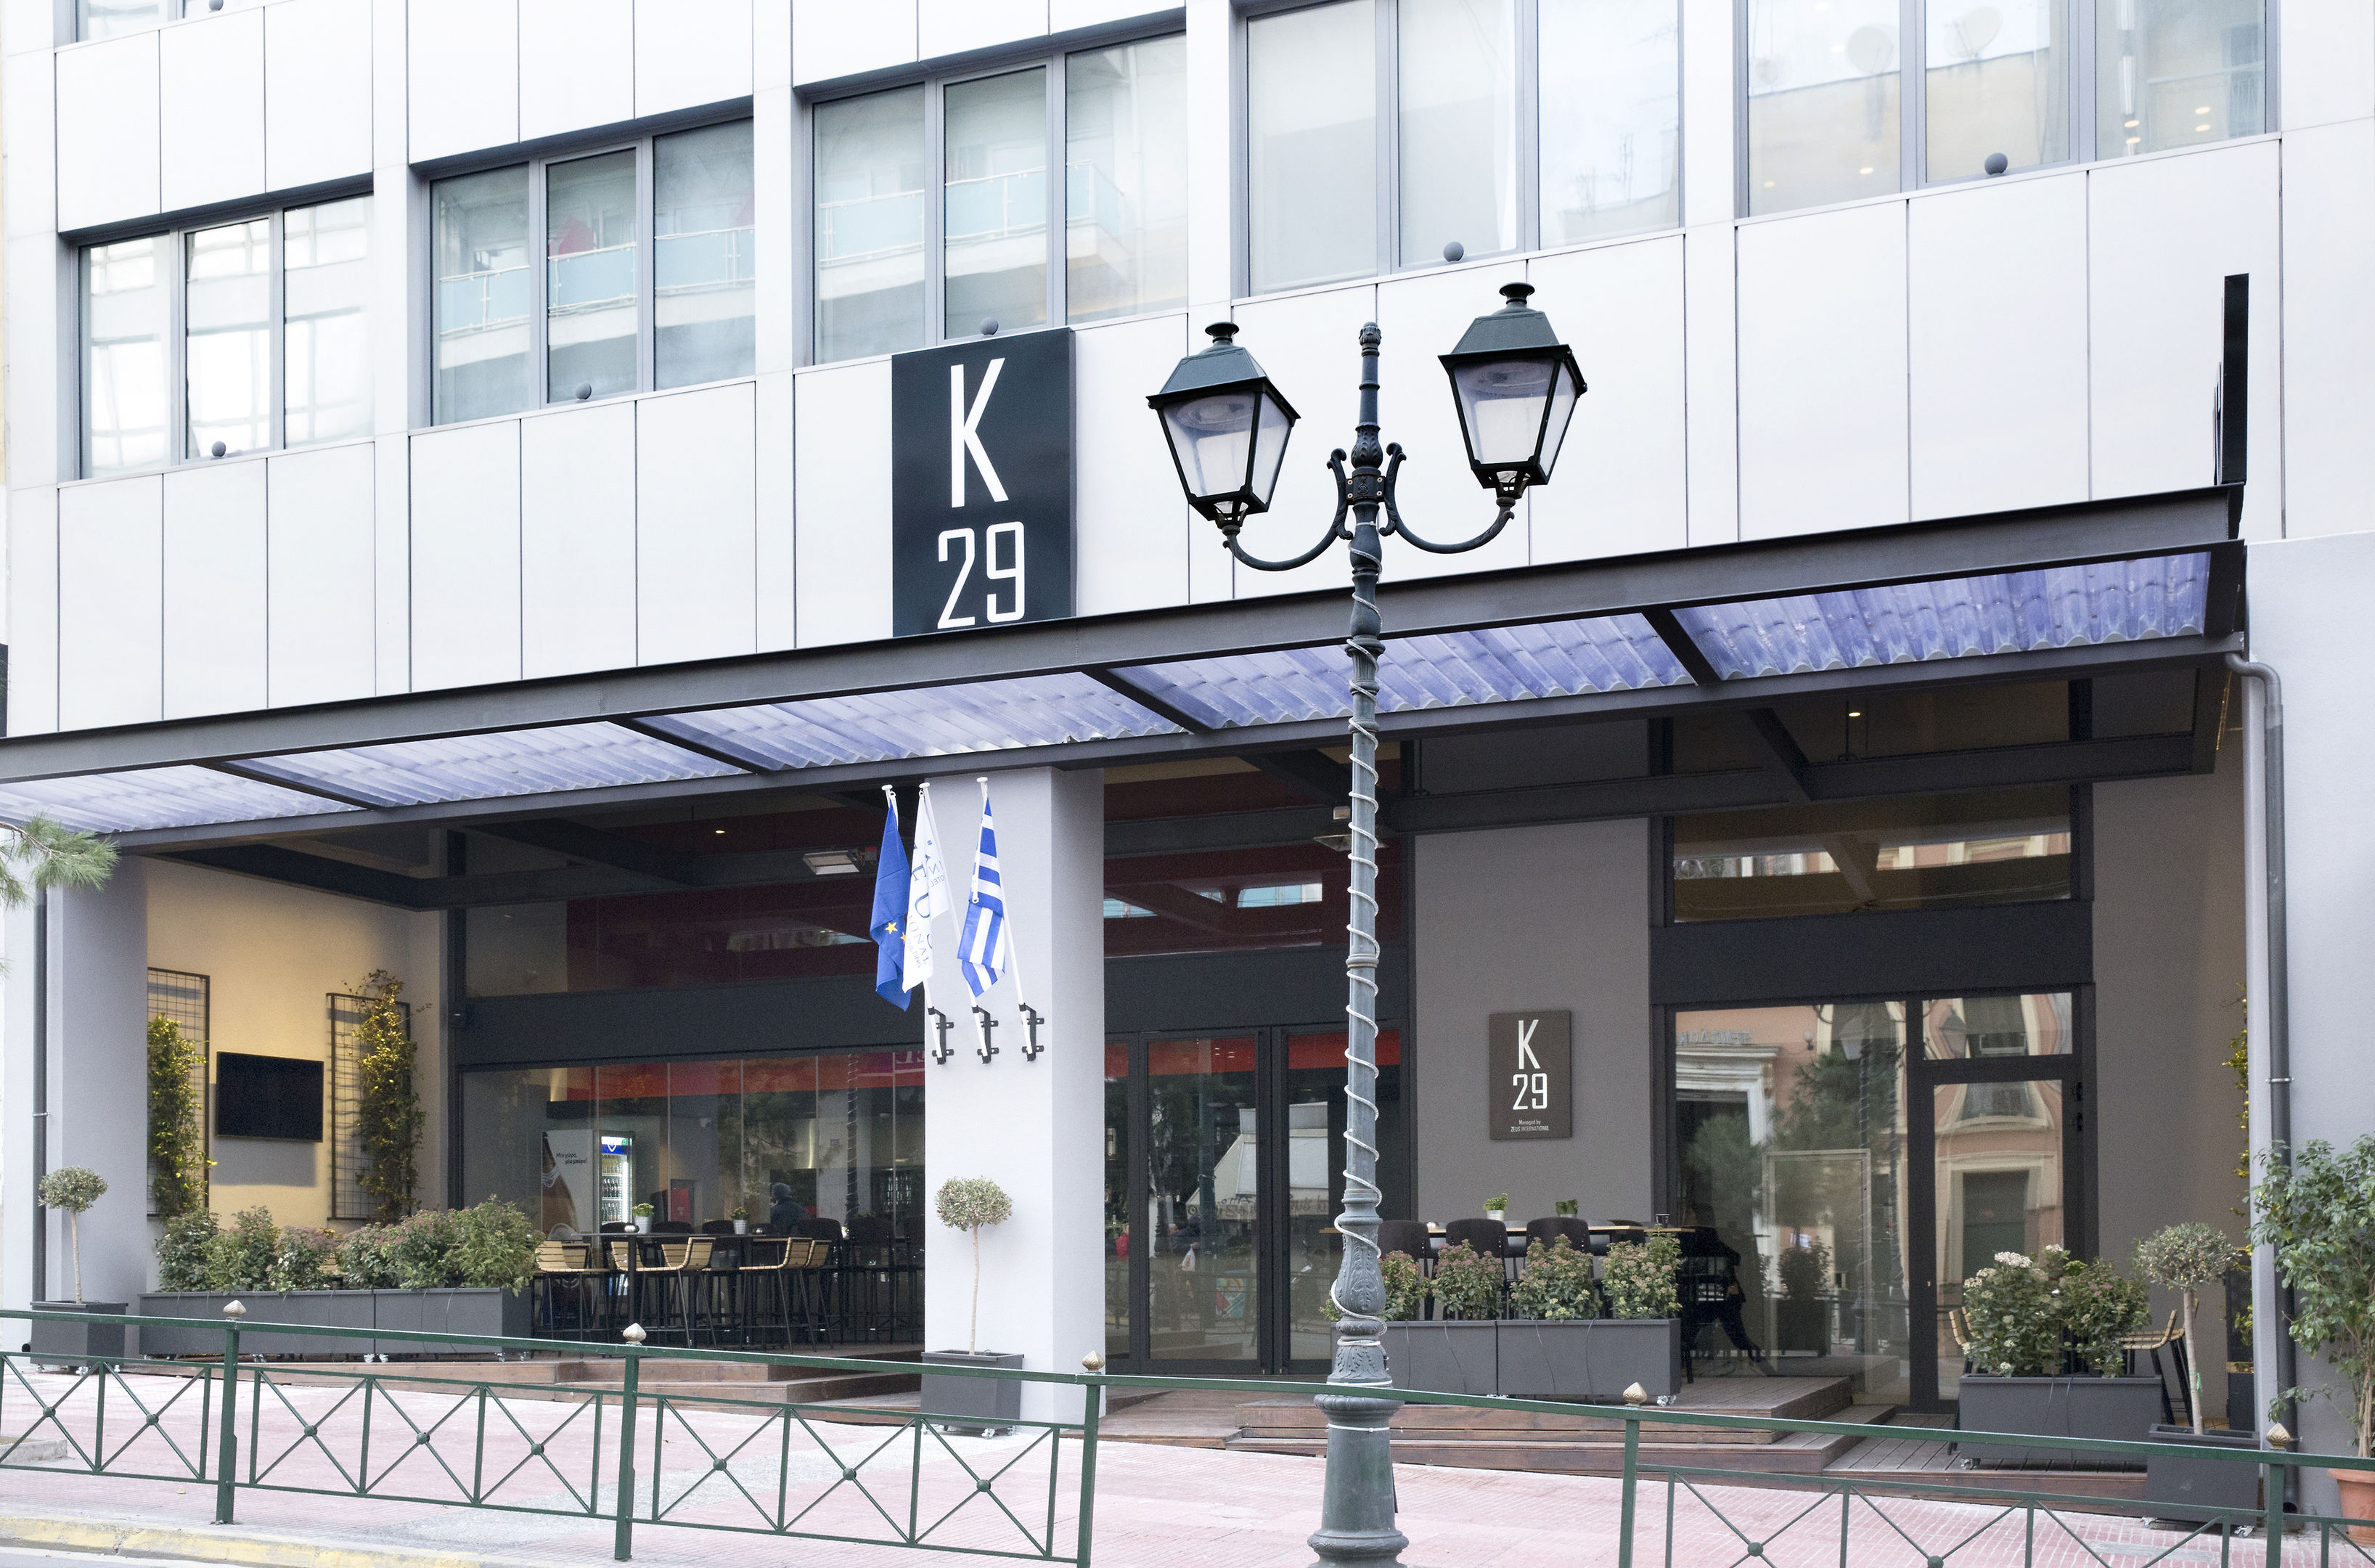 Athenaeum K29 Hotel